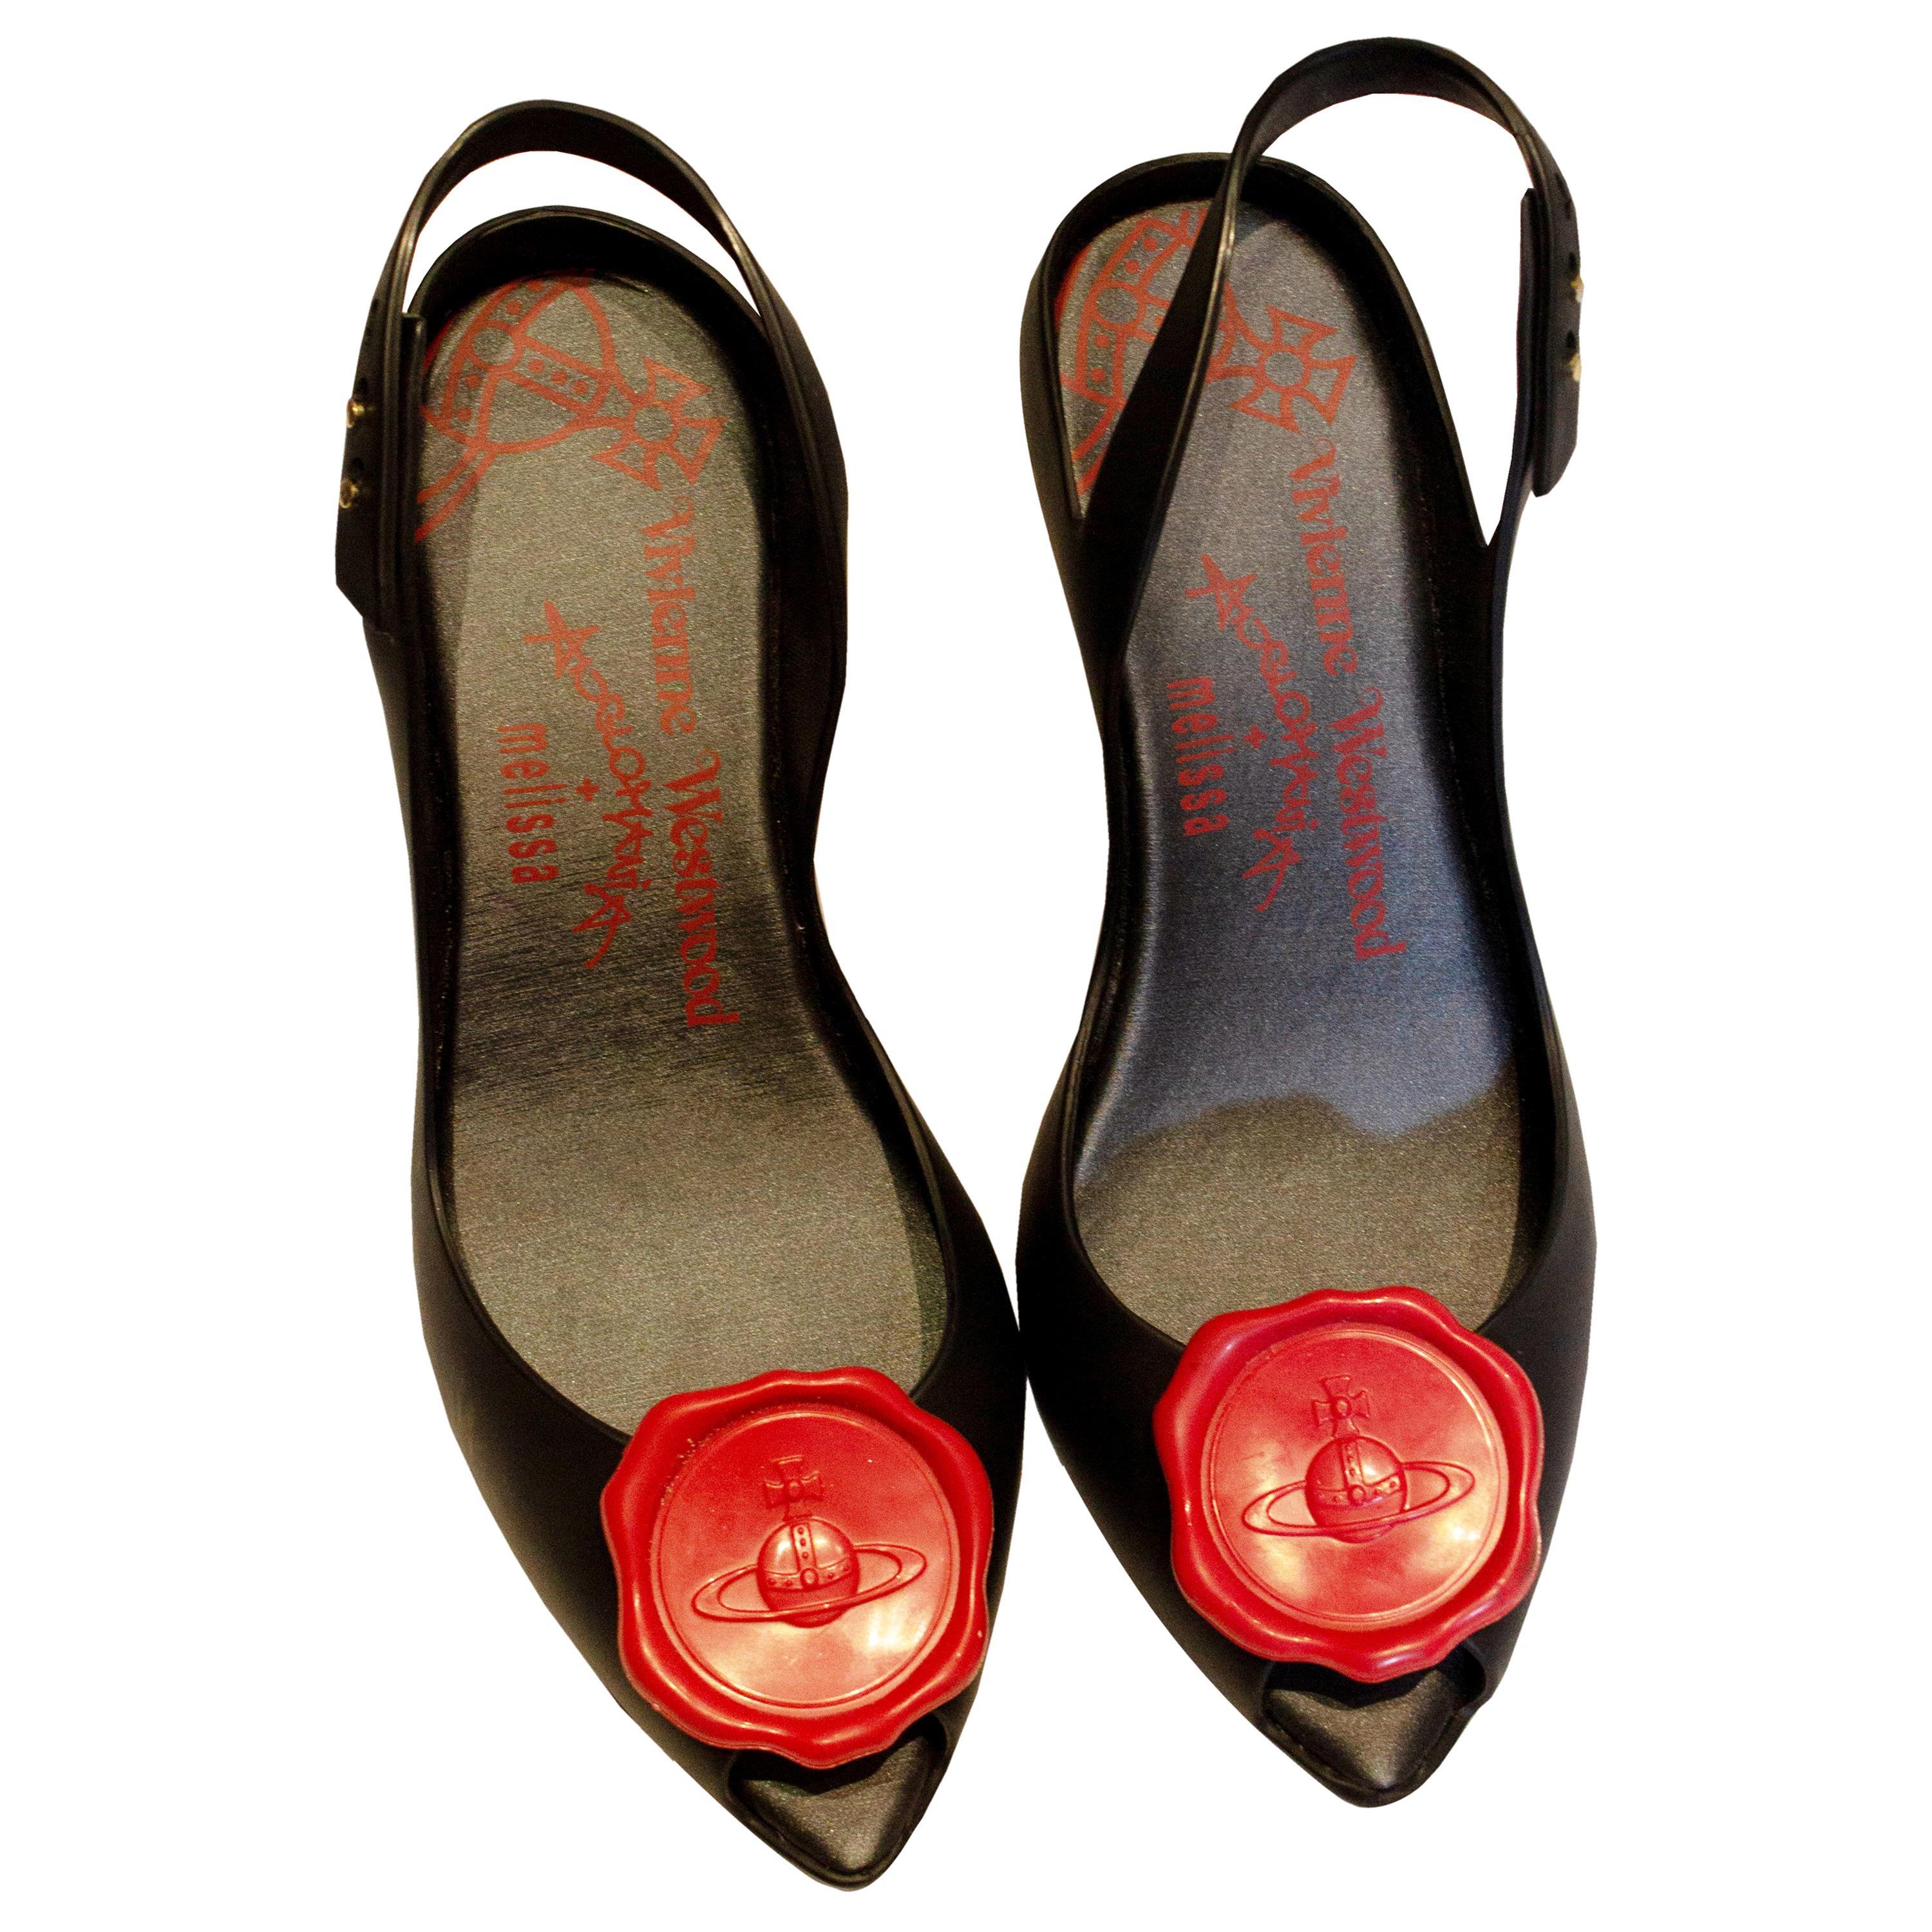 Vivienne Westwood Anglomania Peep Toe Shoes